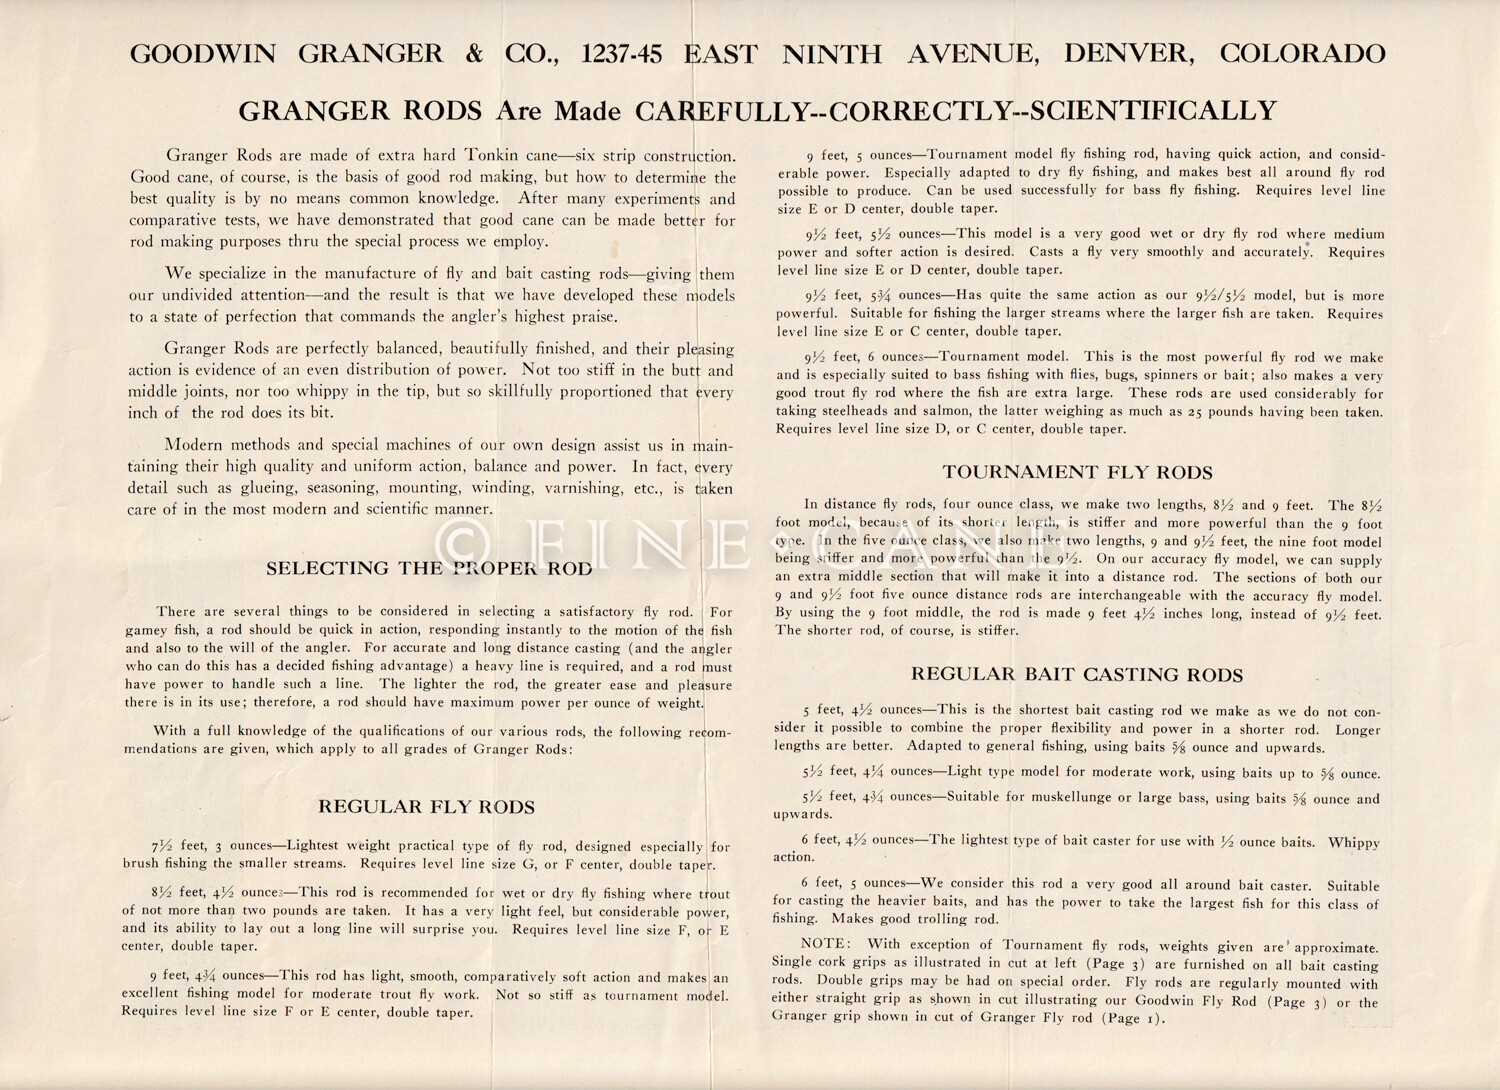 1923-24 Goodwin Granger Catalog p2